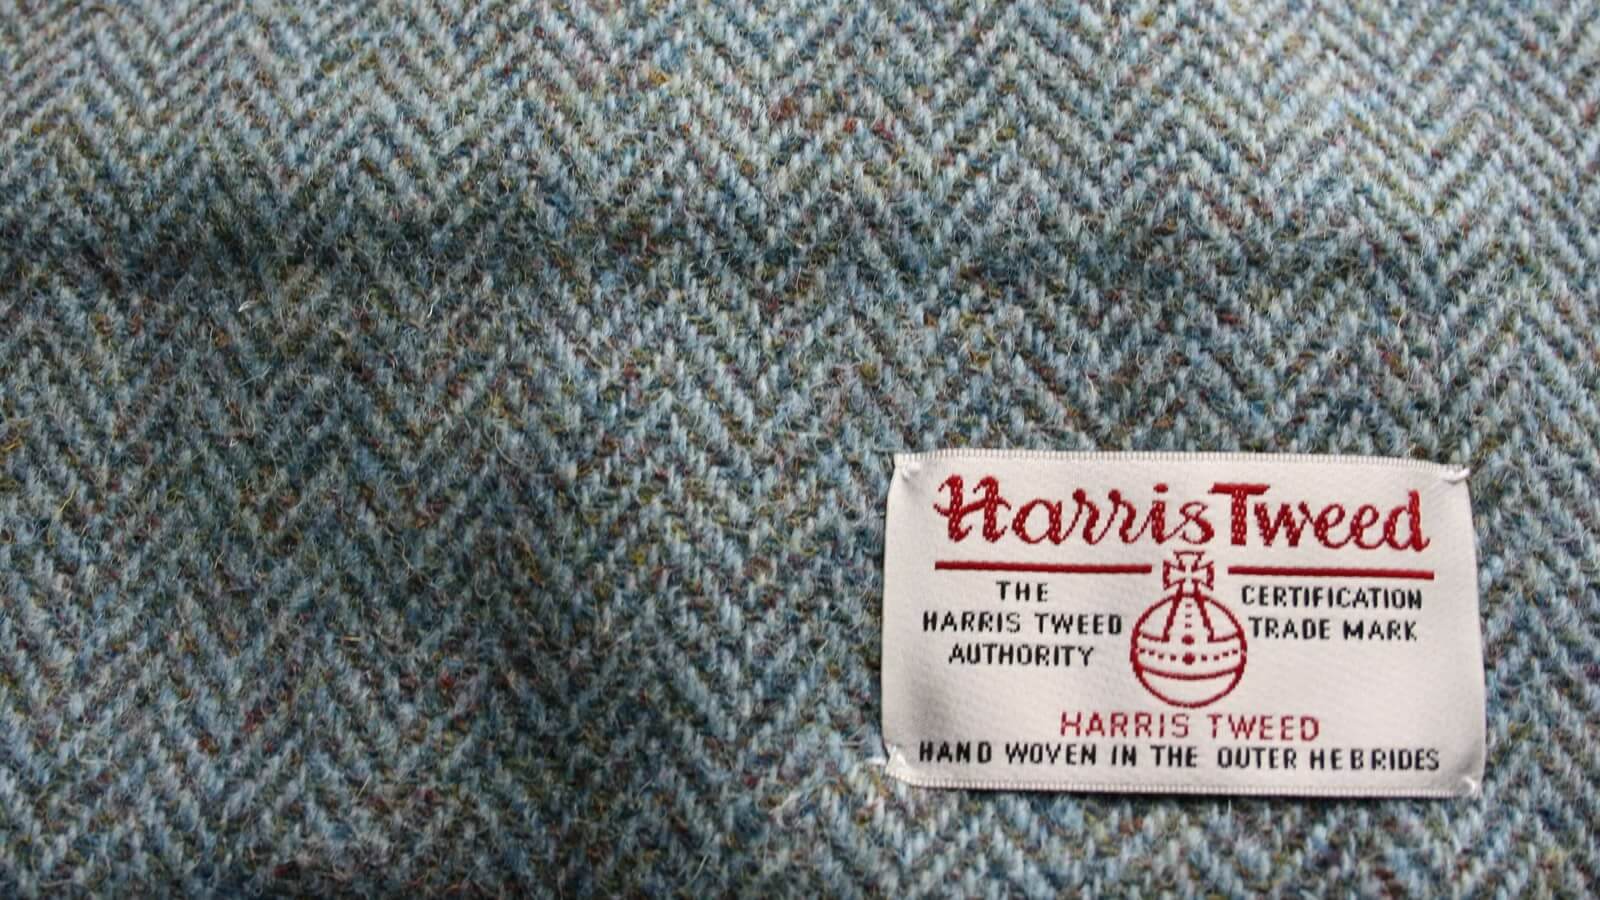 Harris Tweed soft furnishings at holiday cabin, Skye